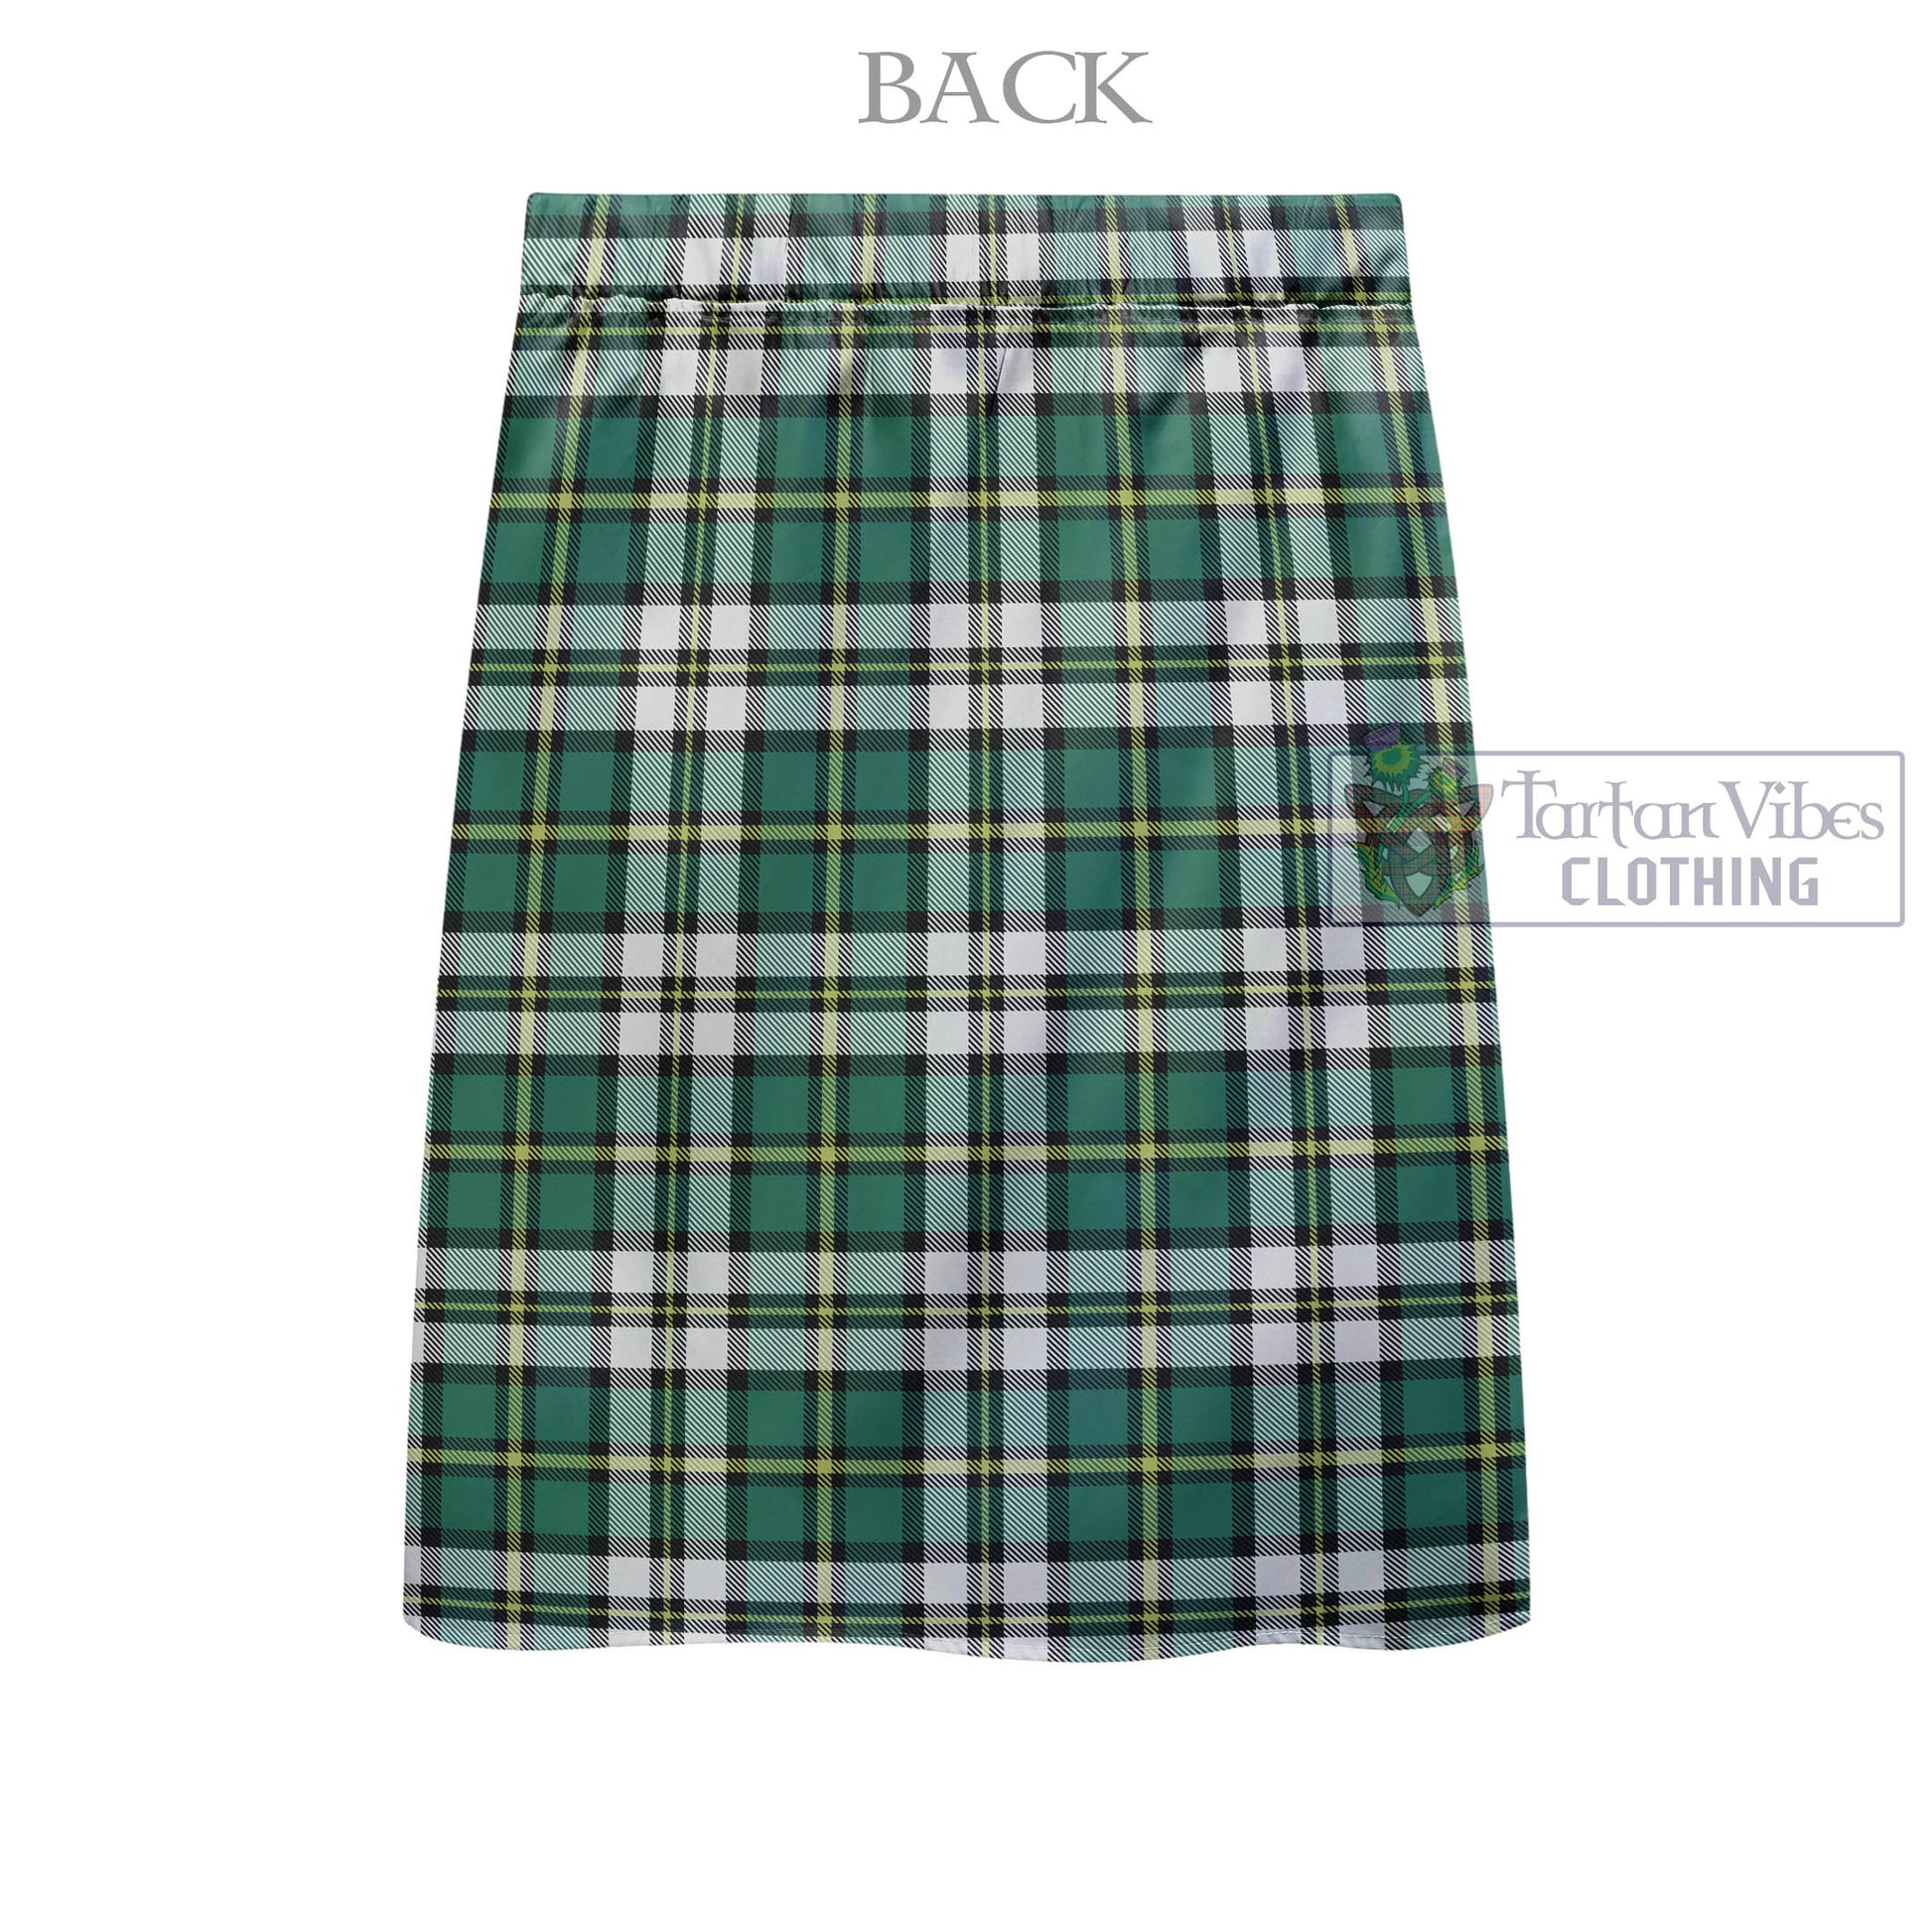 Tartan Vibes Clothing Cape Breton Island Canada Tartan Men's Pleated Skirt - Fashion Casual Retro Scottish Style